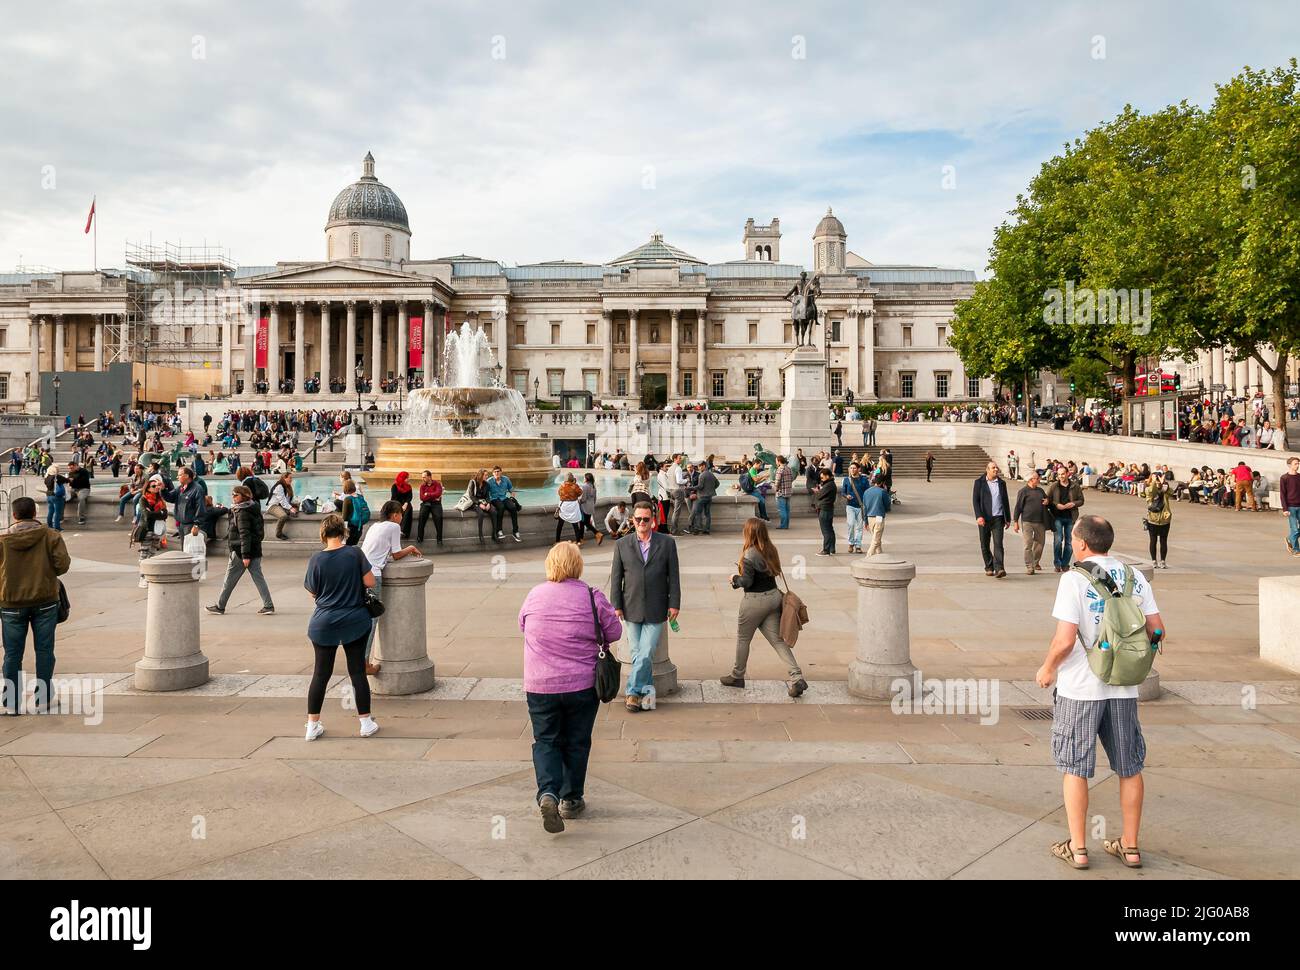 London, United Kingdom - September 26, 2013: Crowd of people visiting the Trafalgar Square in central London, United Kingdom Stock Photo